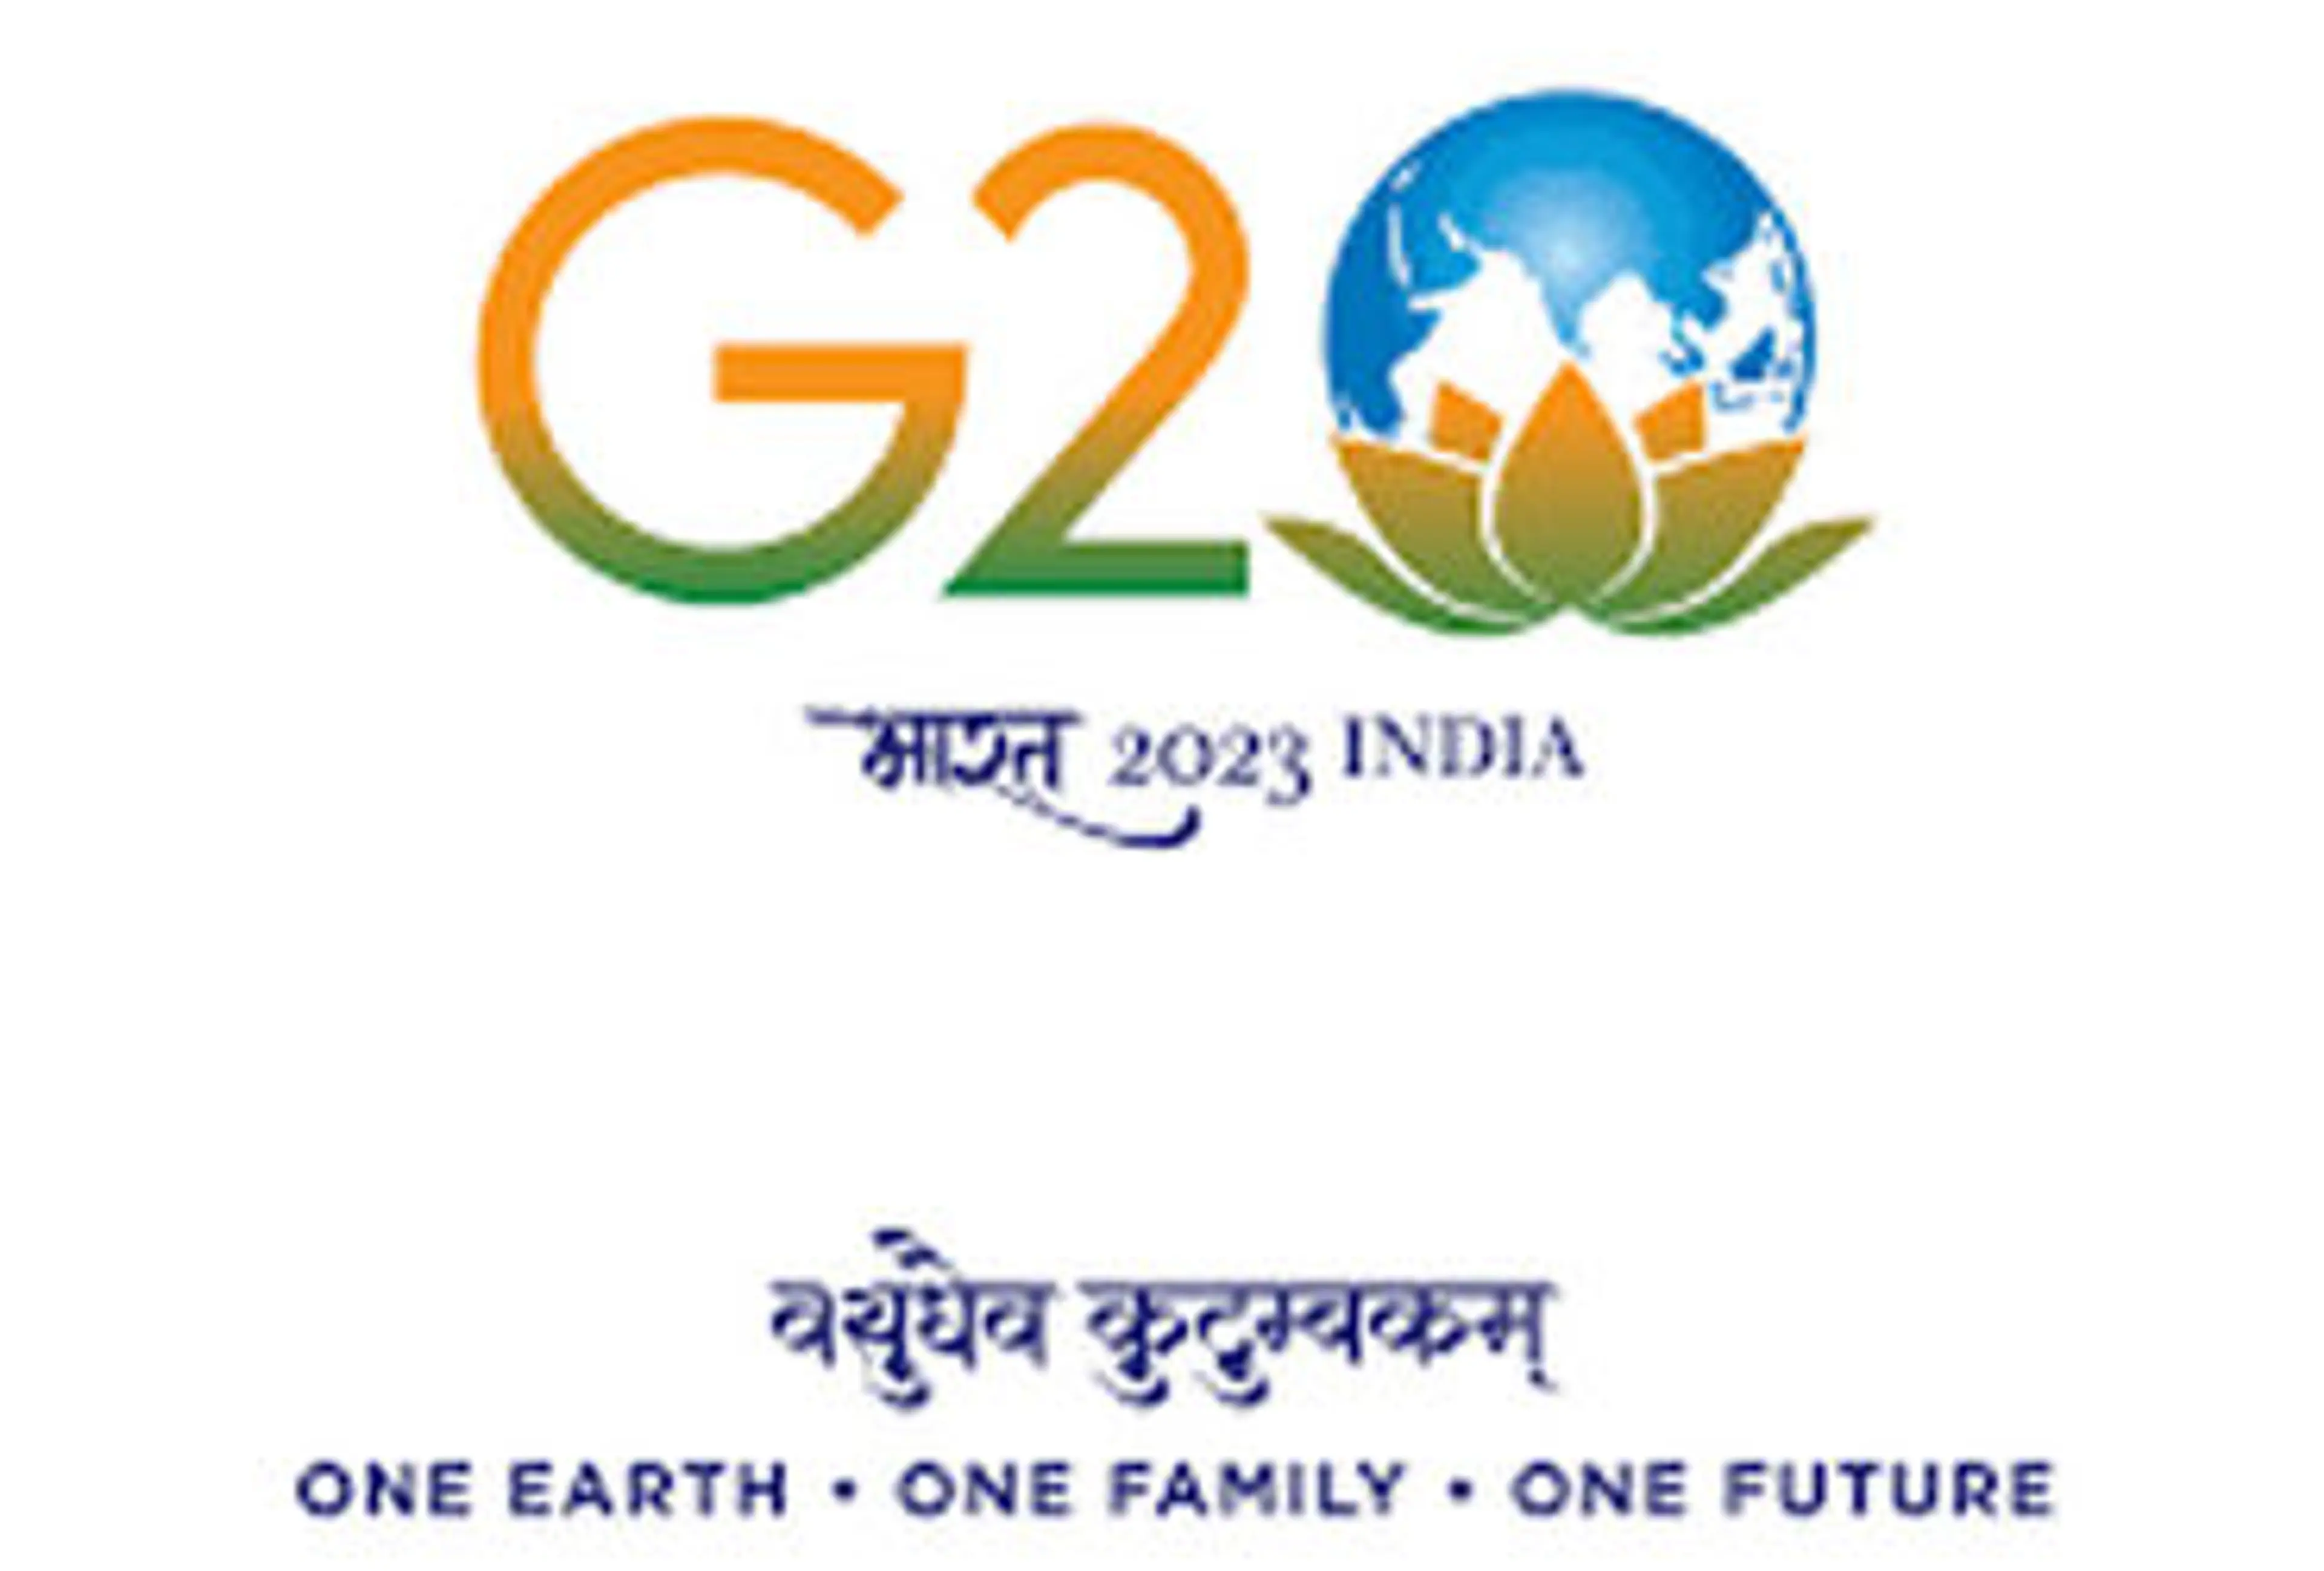 G-20 માટે દિલ્હીના શણગાર પર ખર્ચ કોણે કર્યો?  શ્રેય લેવા AAP-BJP વચ્ચે શાબ્દિક યુદ્ધ છંછેડાયું